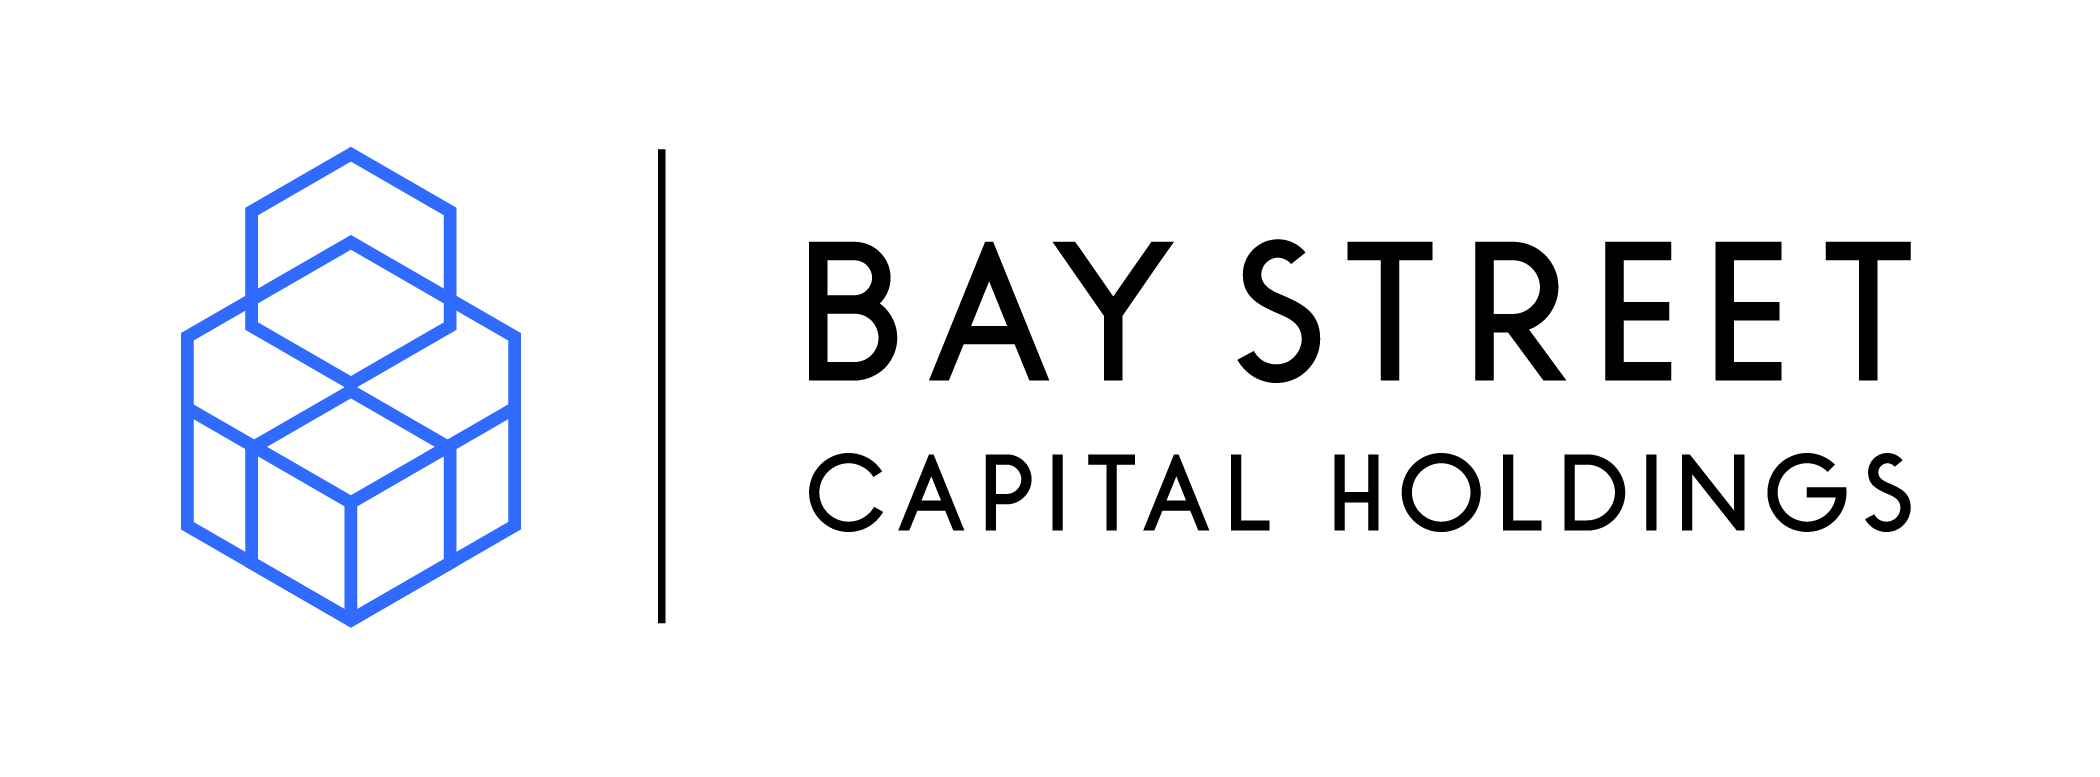 Bay Street Capital Holdings